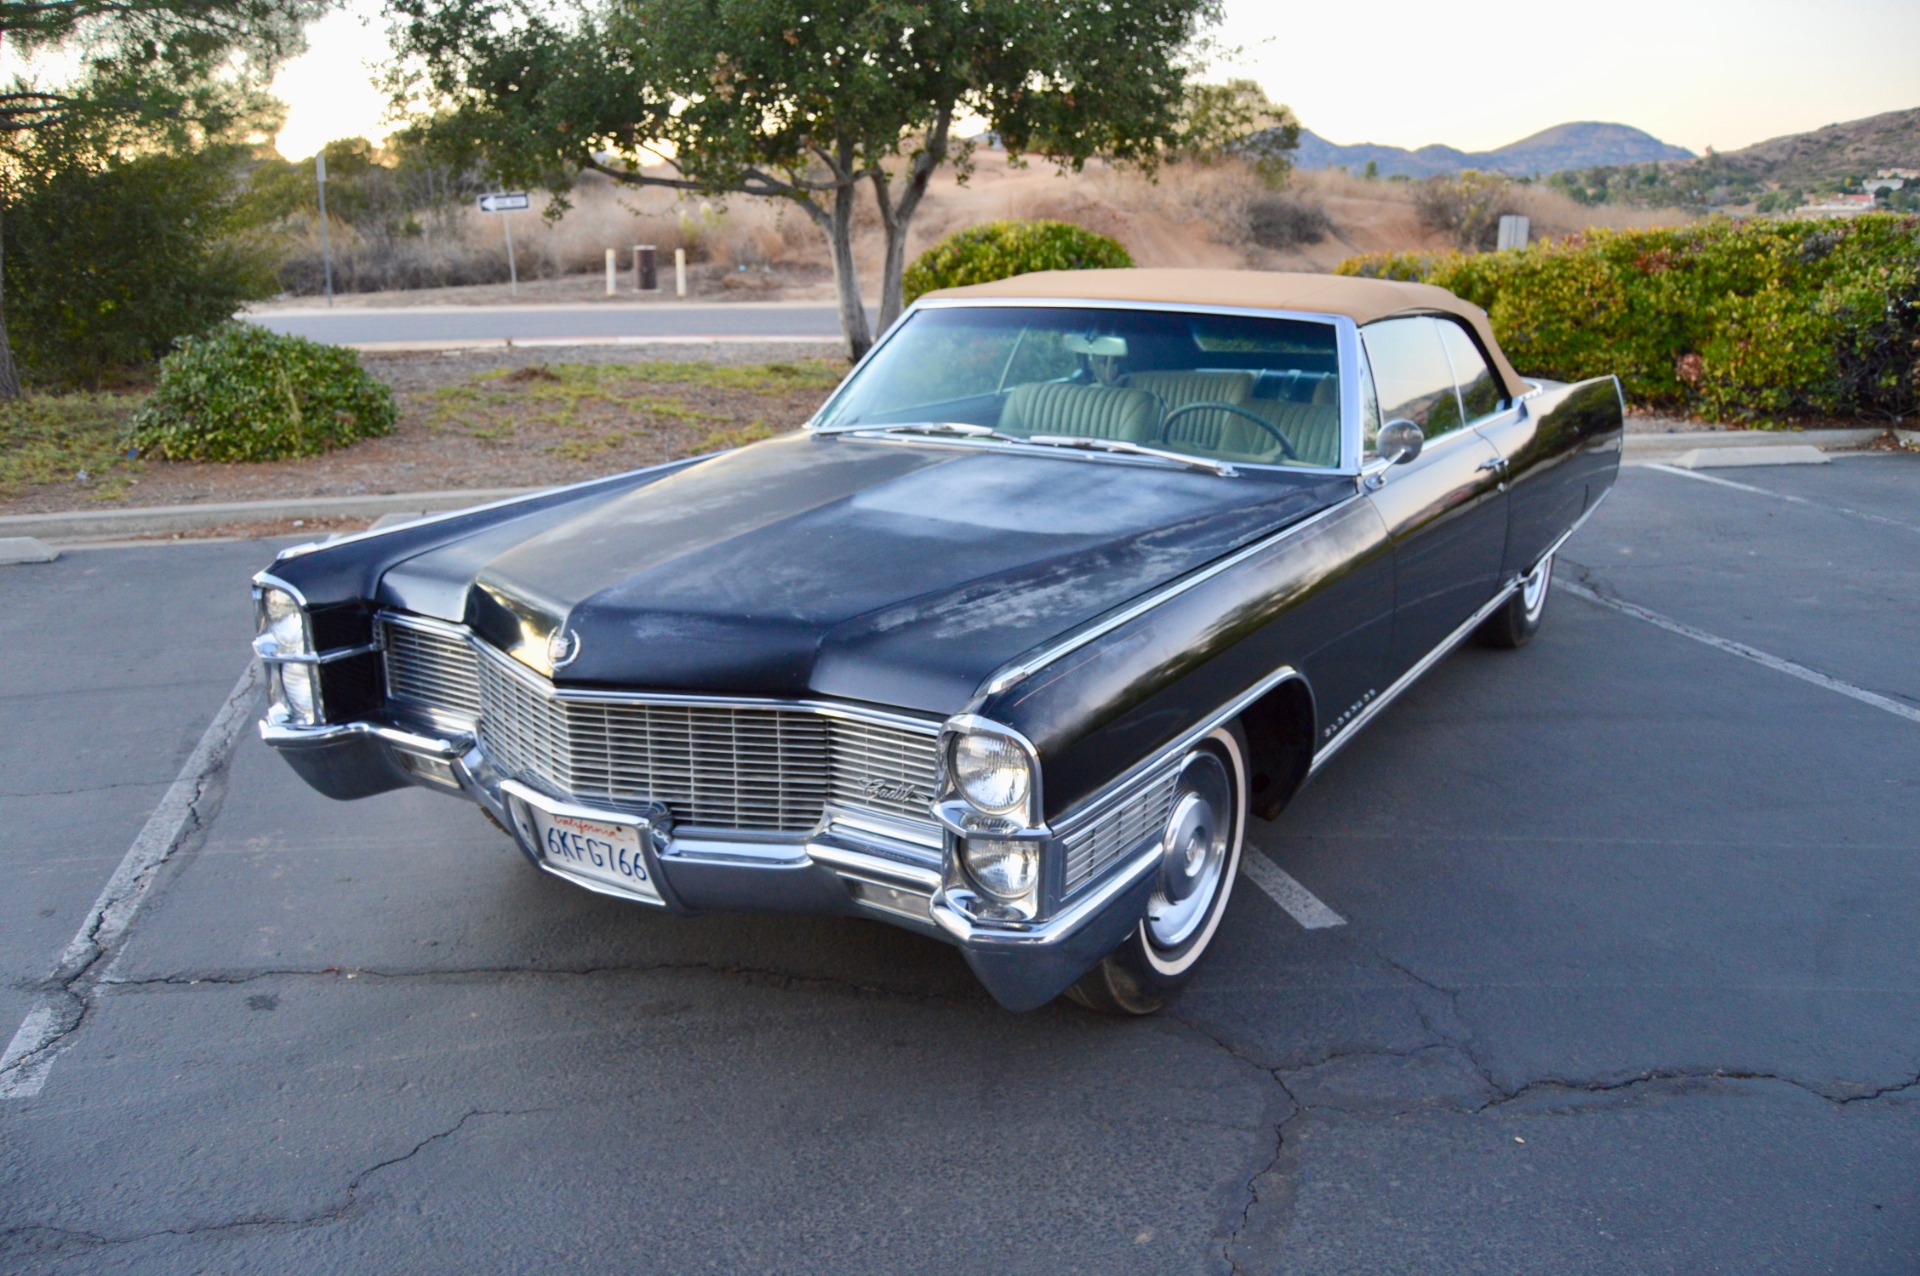 Used 1965 Cadillac Eldorado For Sale ($15,500) | Affordable Classics San  Diego Stock #157